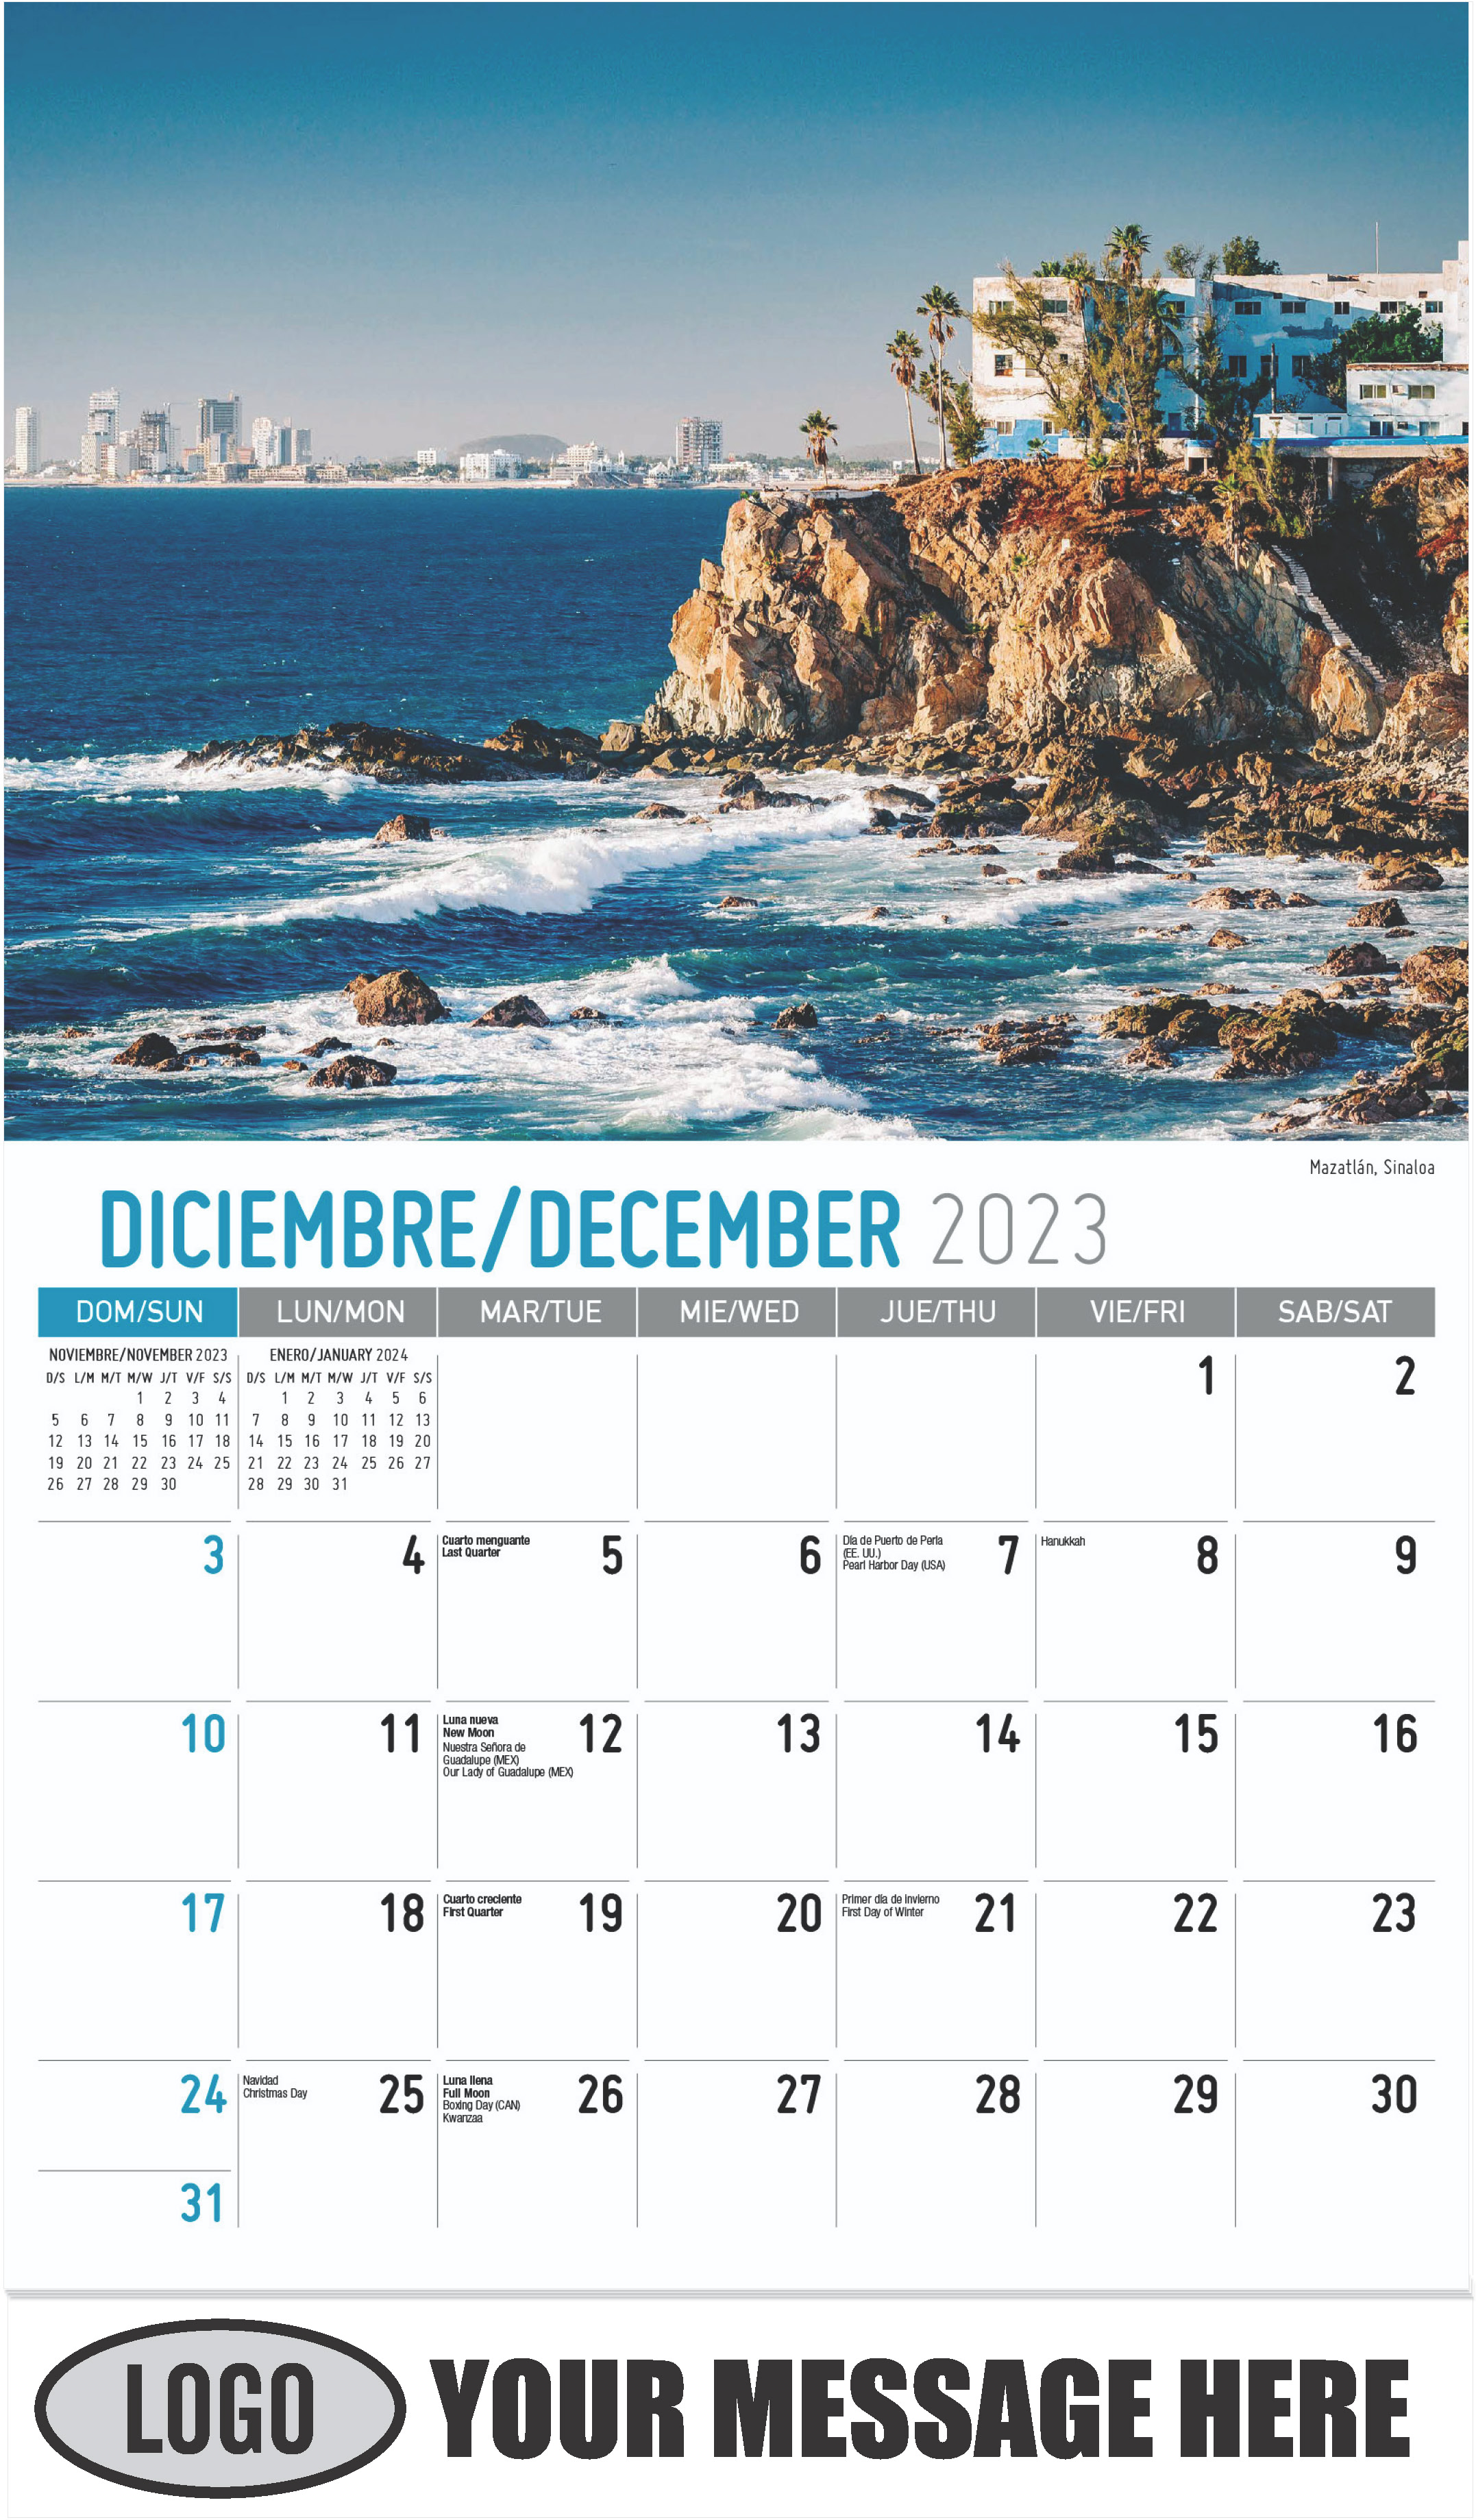 December 2023 - Scenes of Mexico (Spanish-English bilingual) 2023 Promotional Calendar